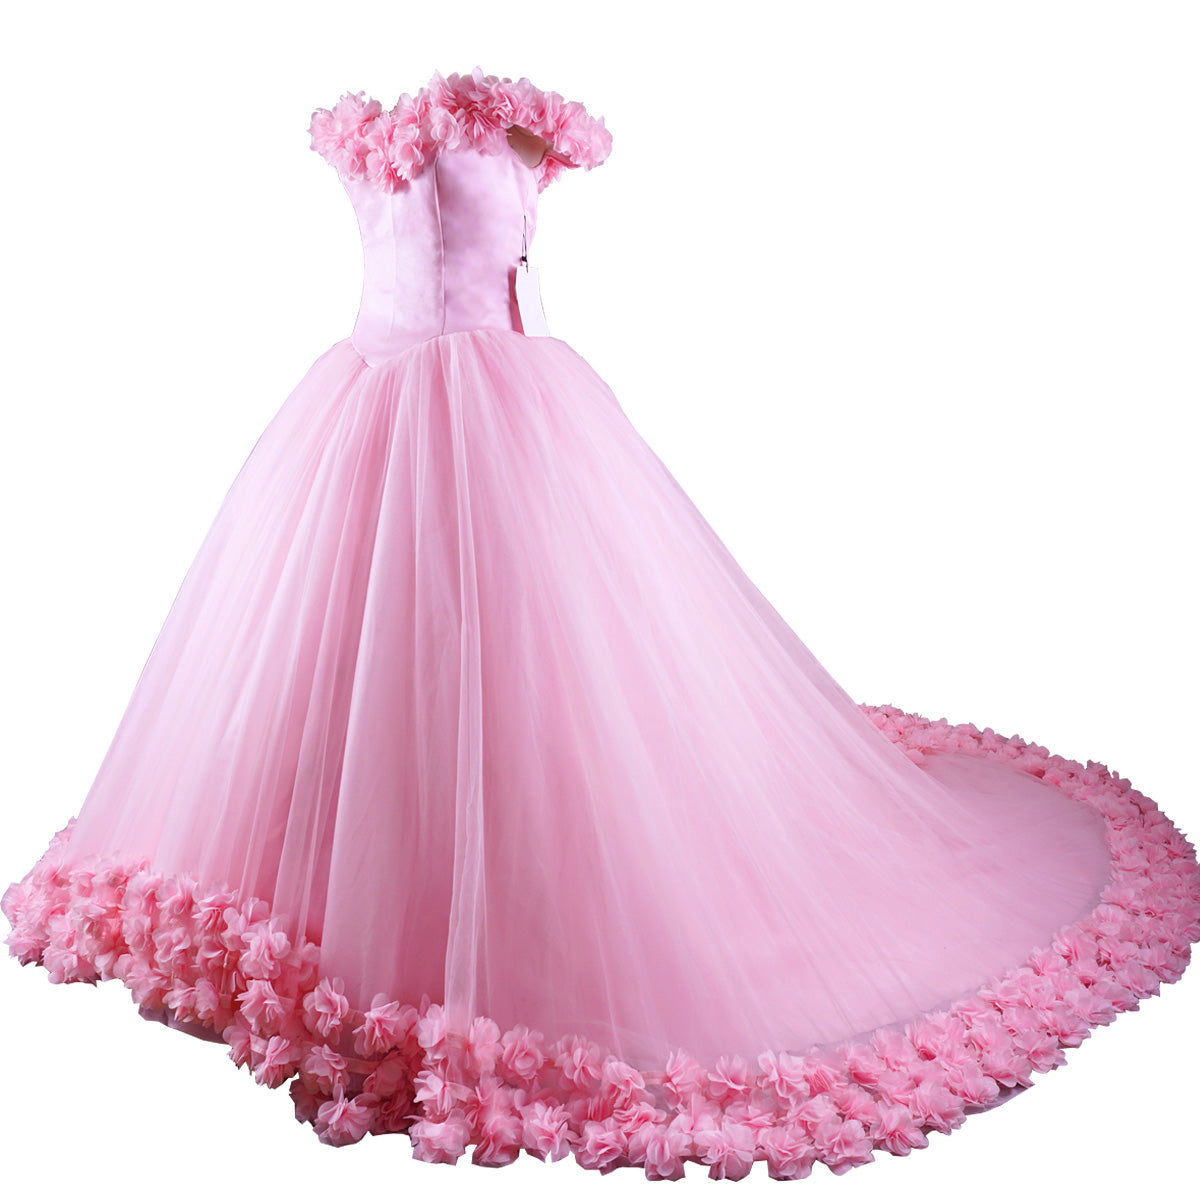 Siaoryne Wd0916 Pink Flowers Wedding Dress,Ball Gowns Bridal Dress Princess,Prom Dress,Quinceanera Dresses